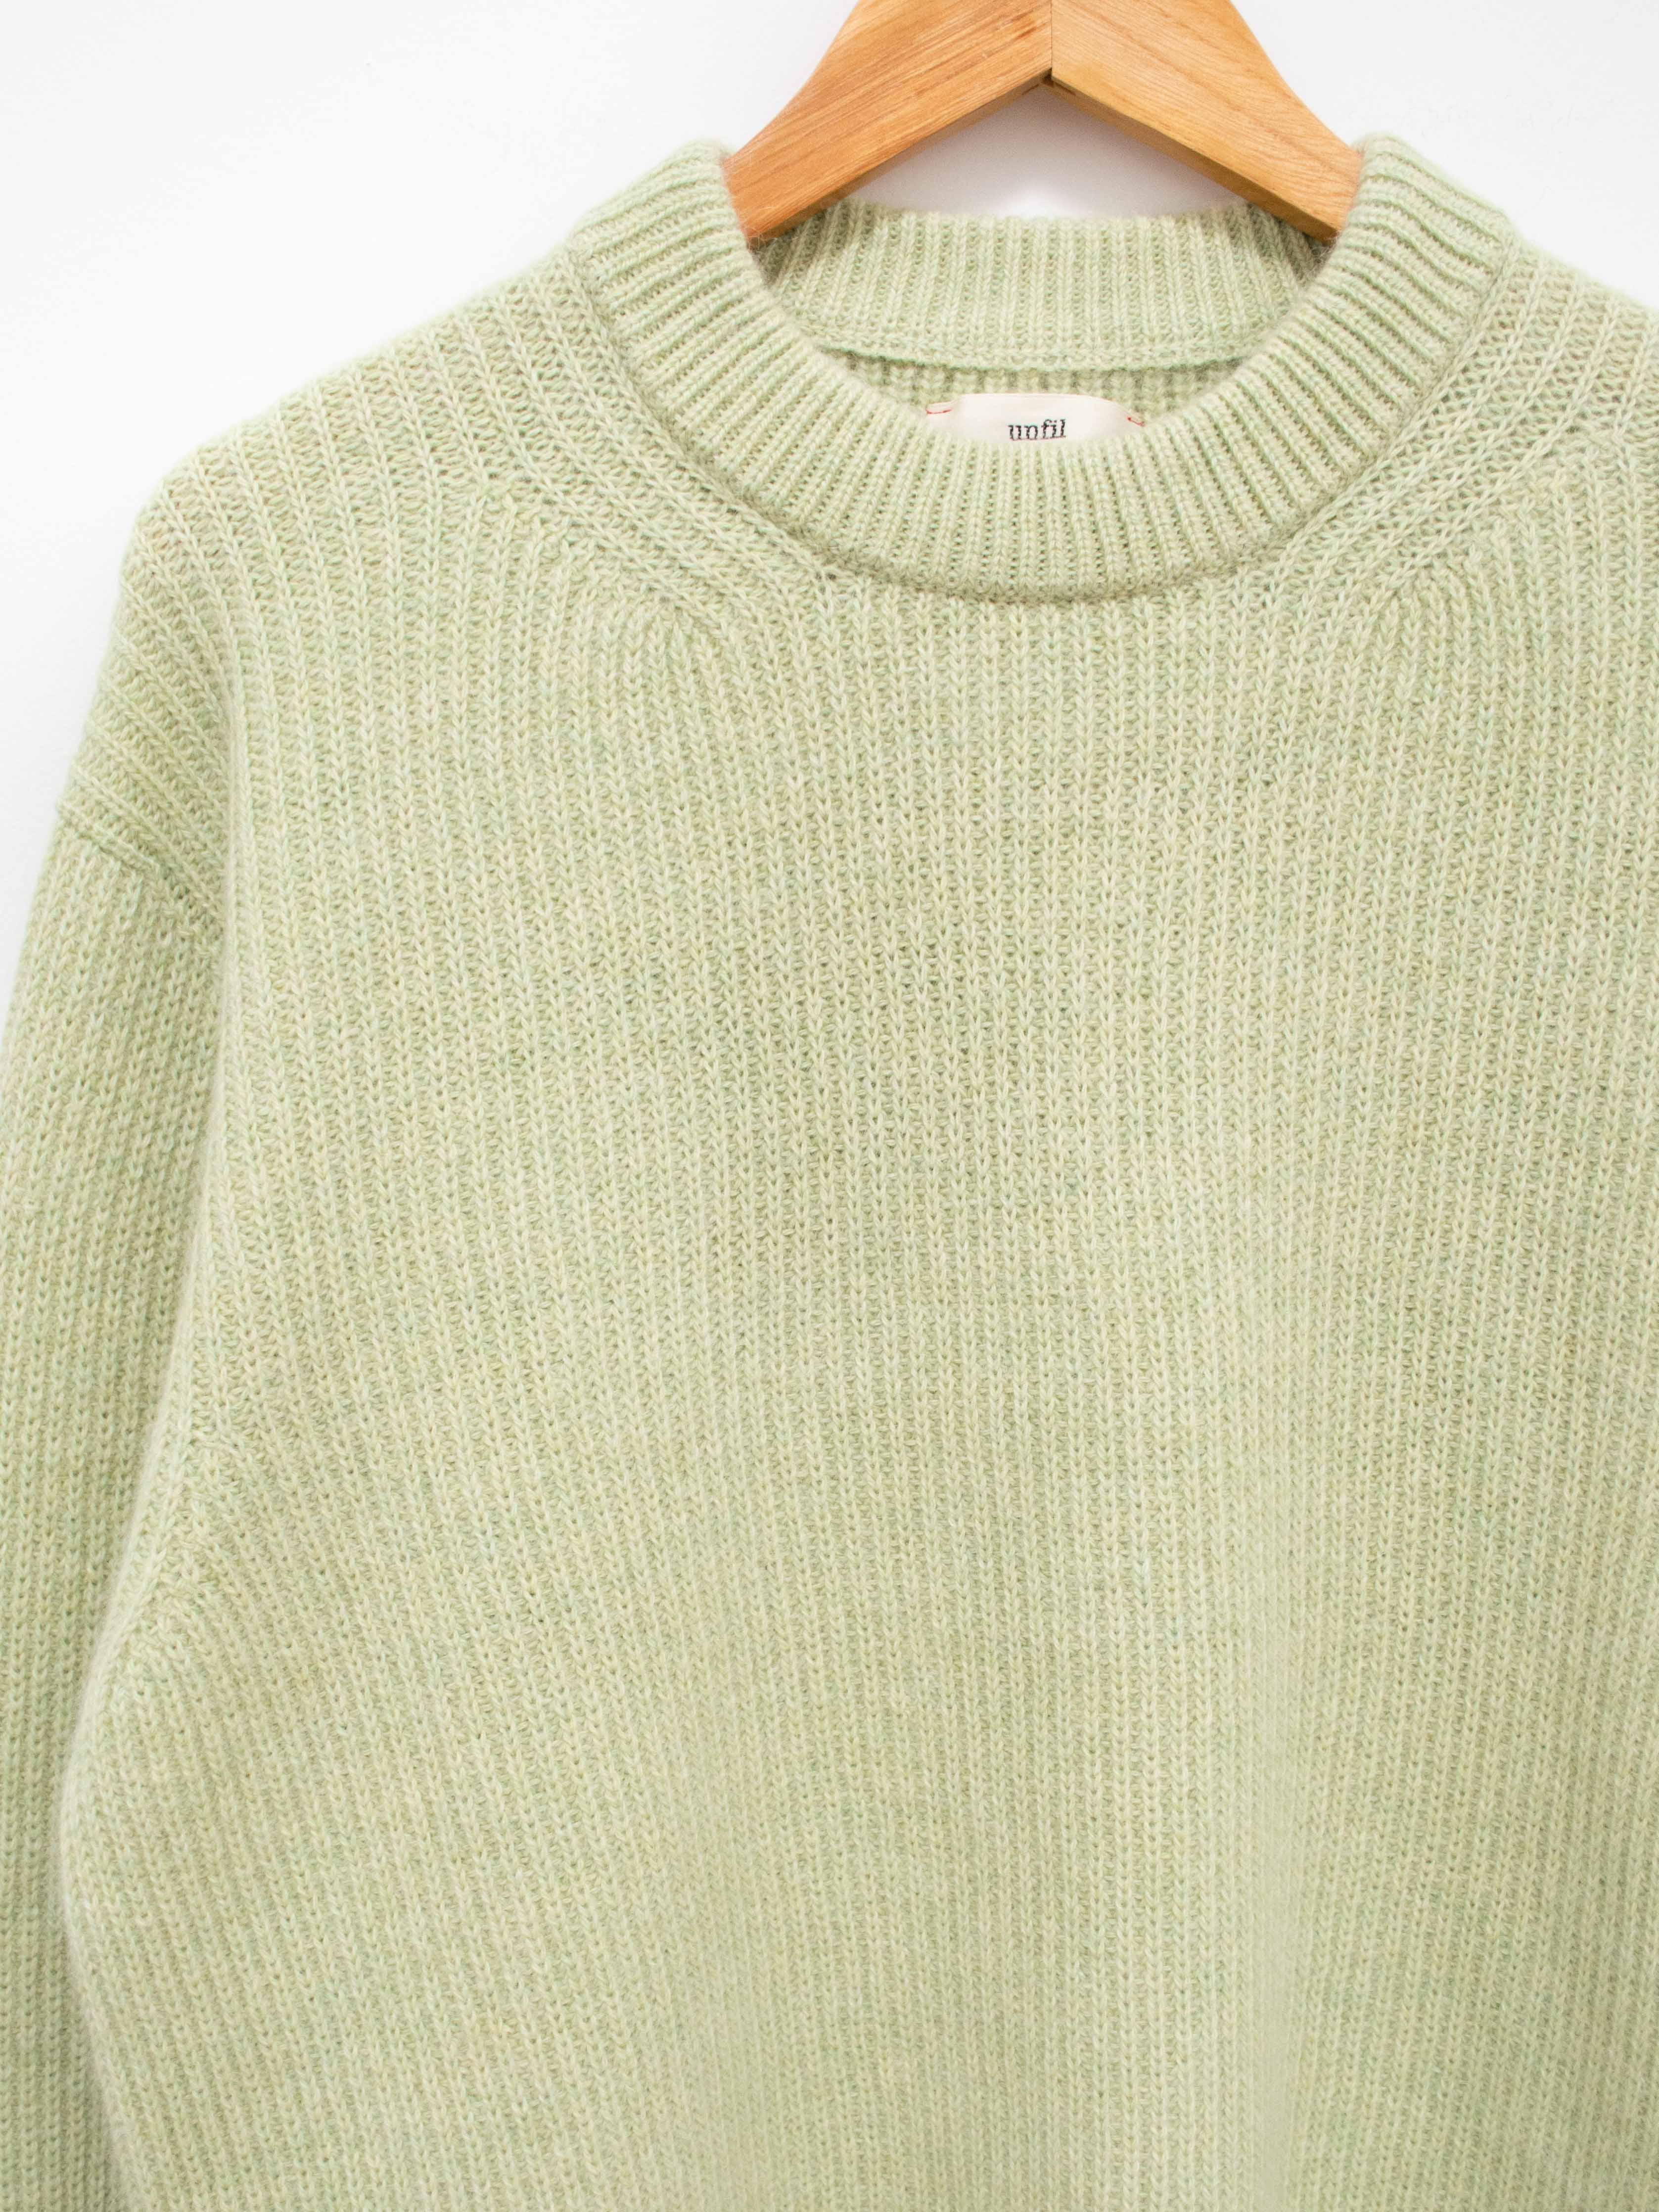 Namu Shop - Unfil Royal Baby Alpaca Sweater - Light Green